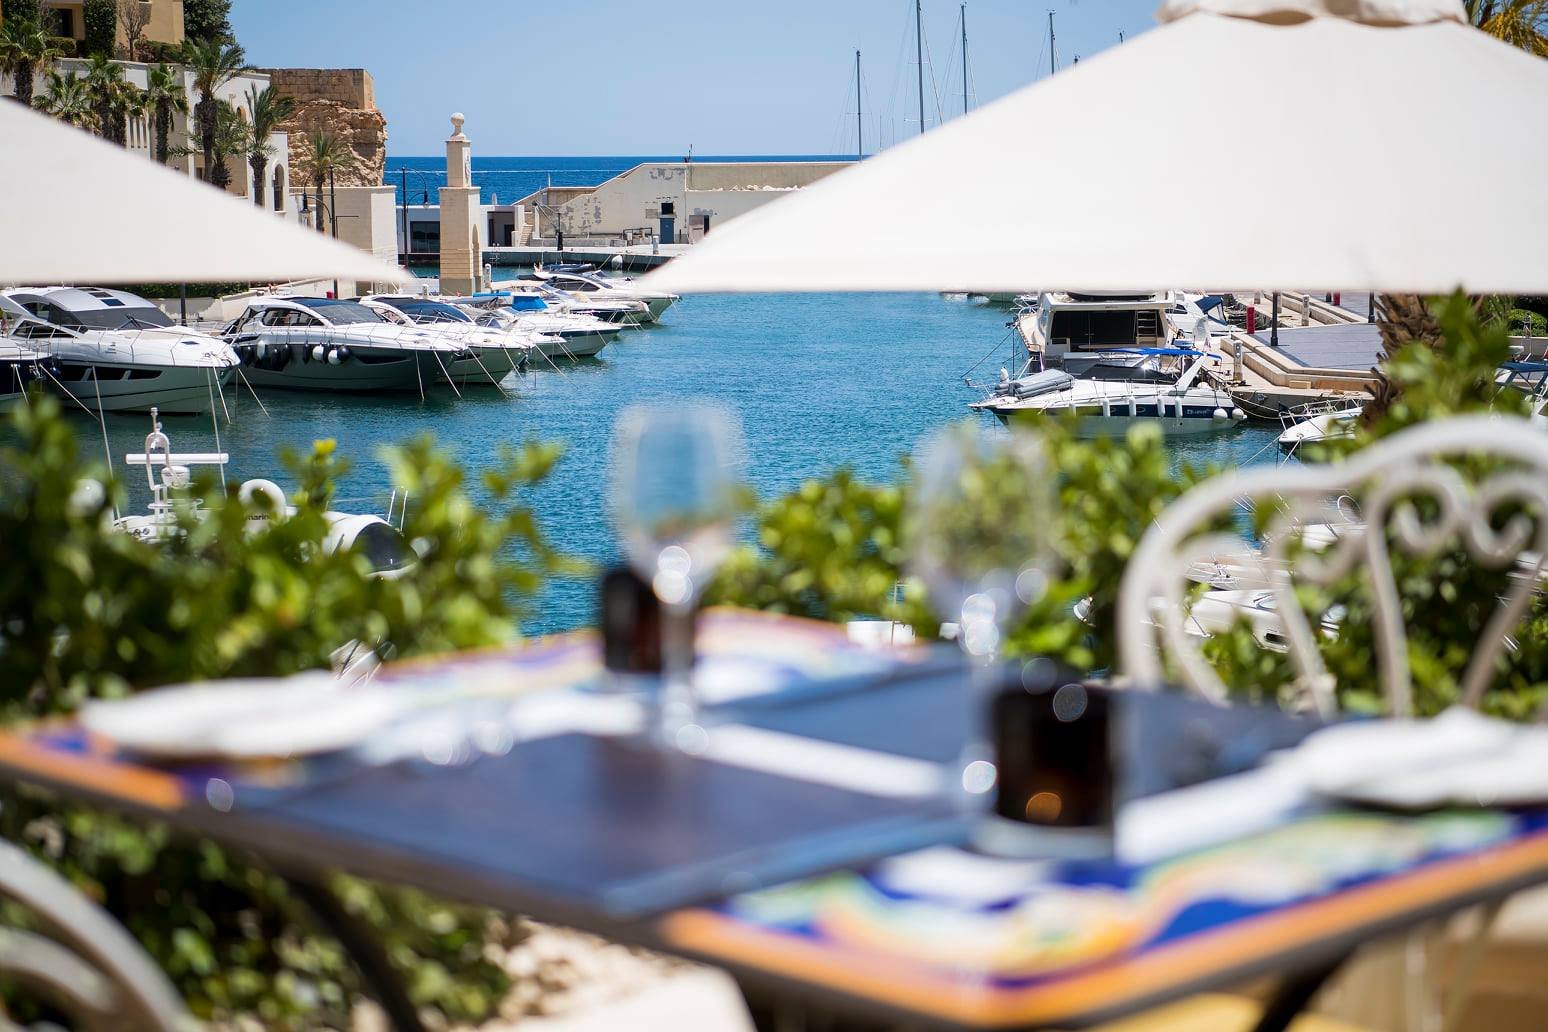 Sale e Pepe - Malta restaurants with a view